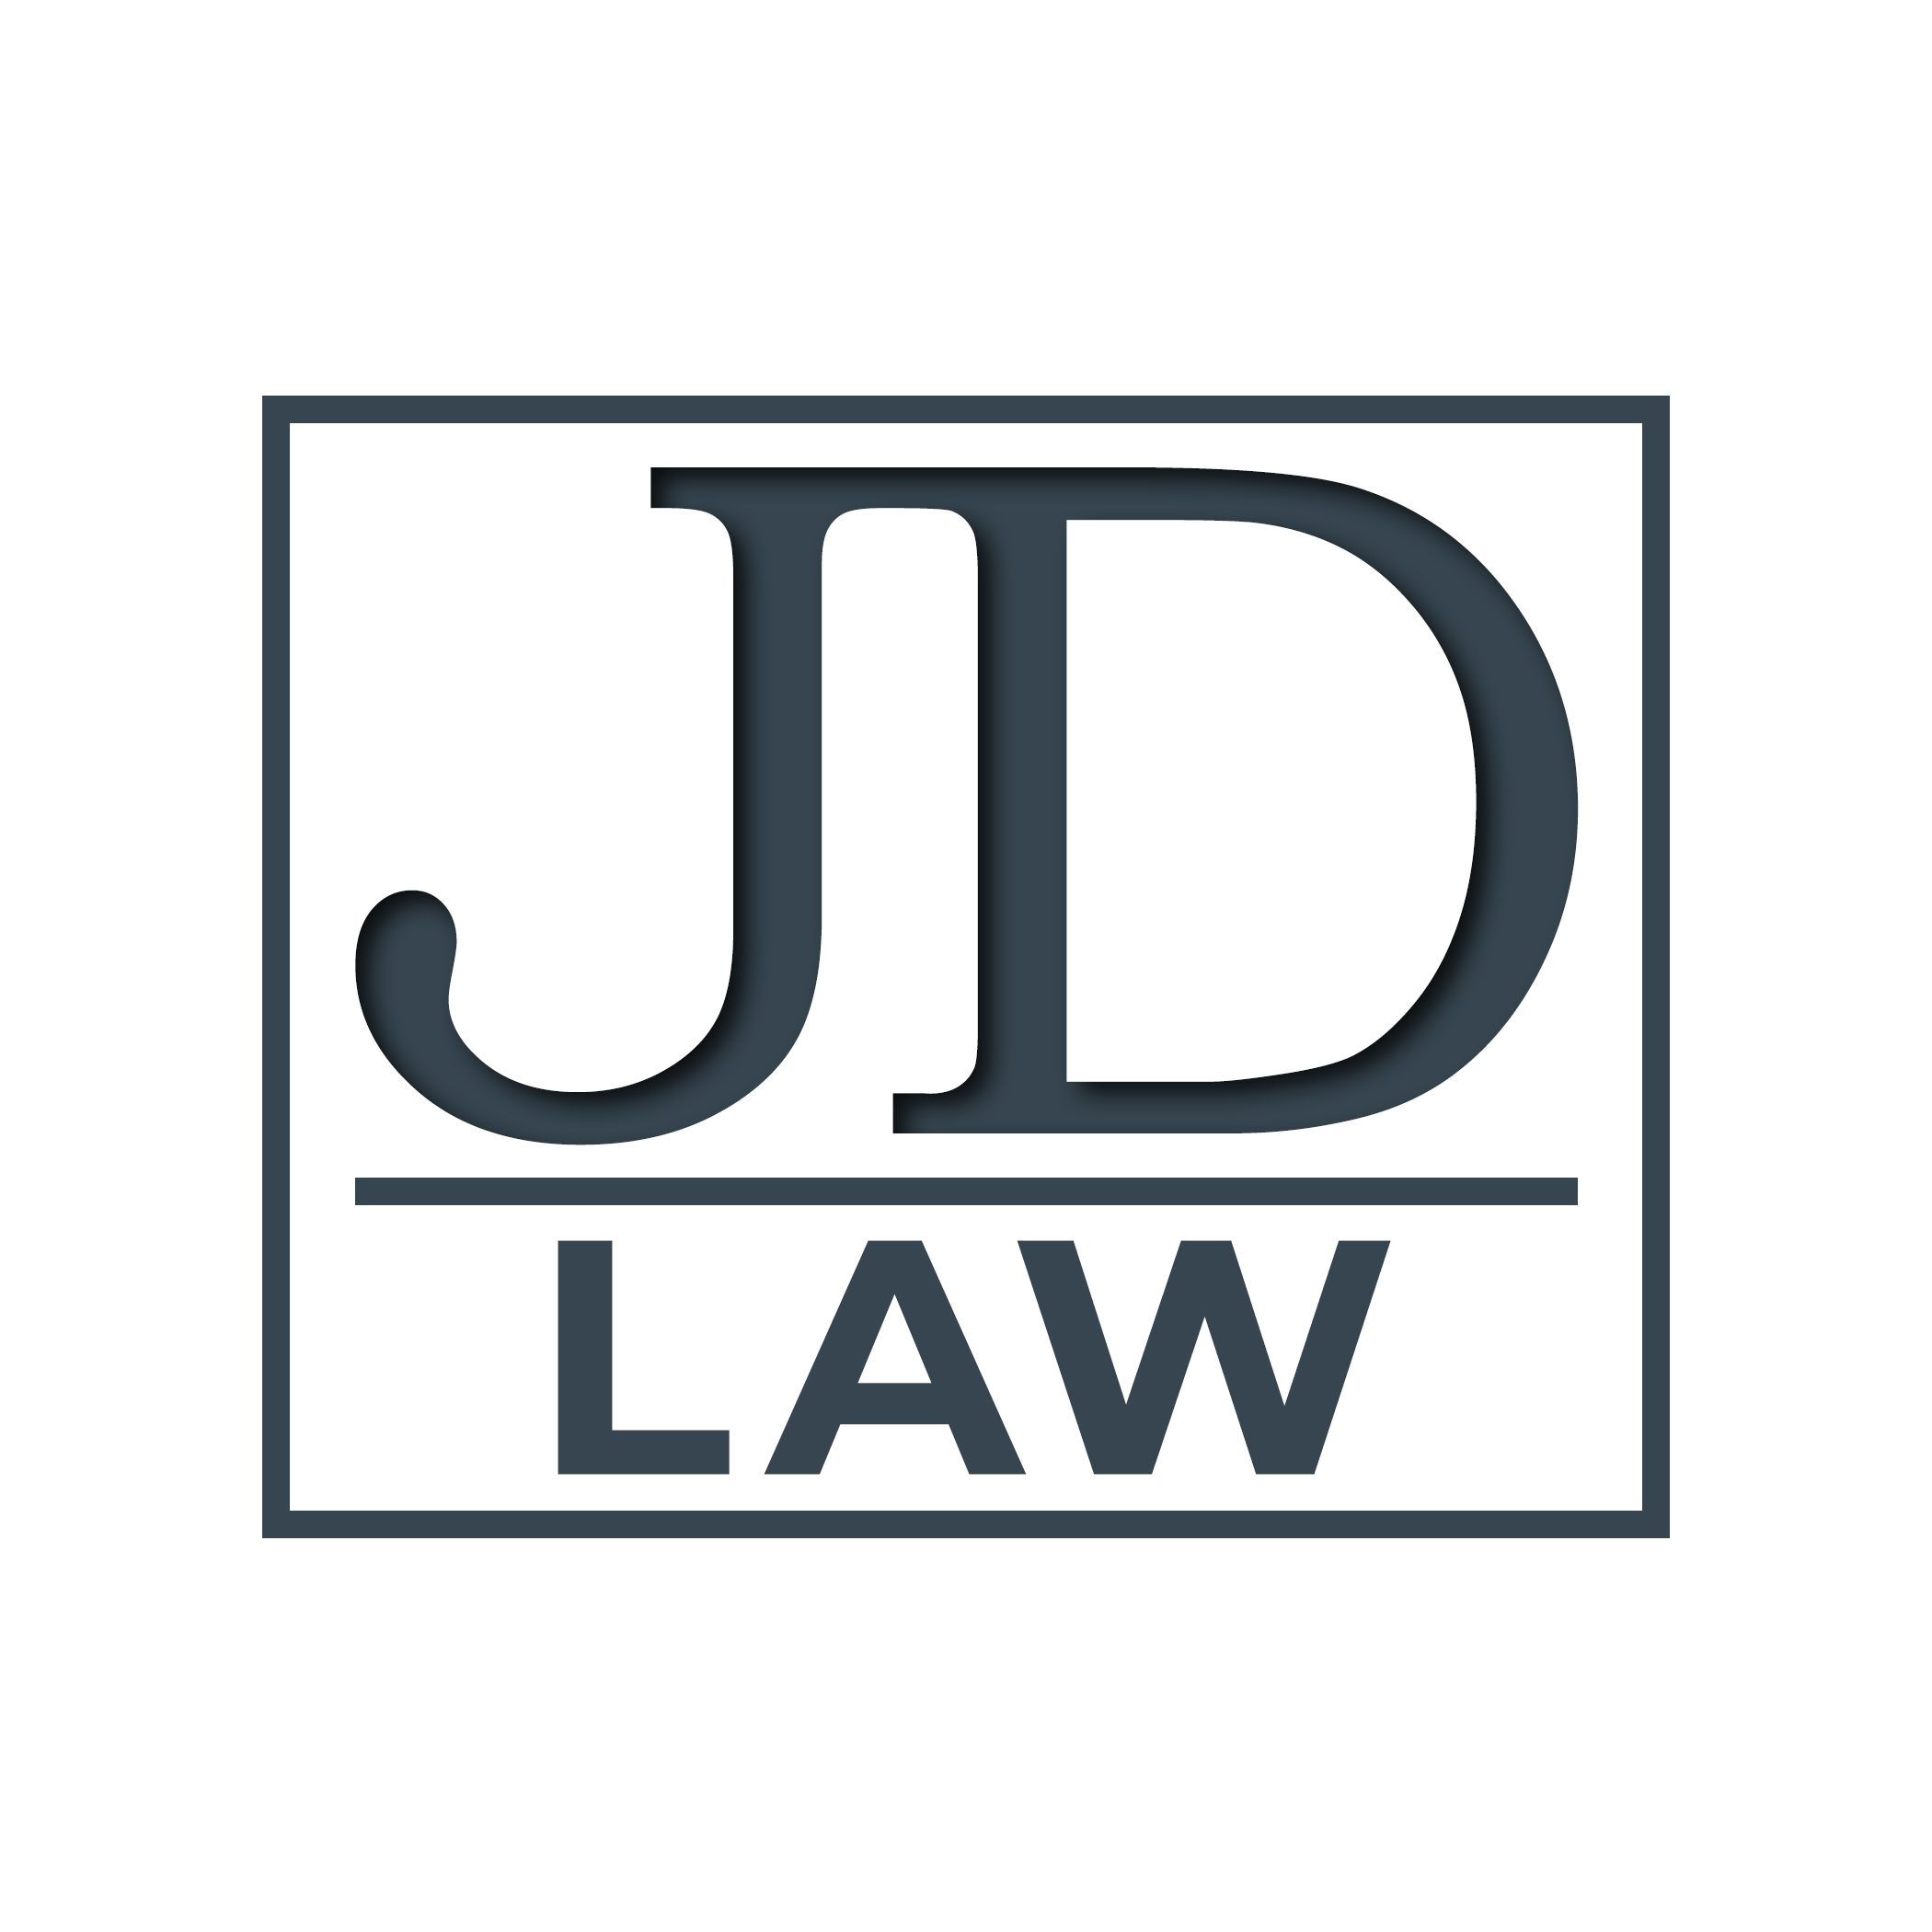 JD LAW, LLC Logo